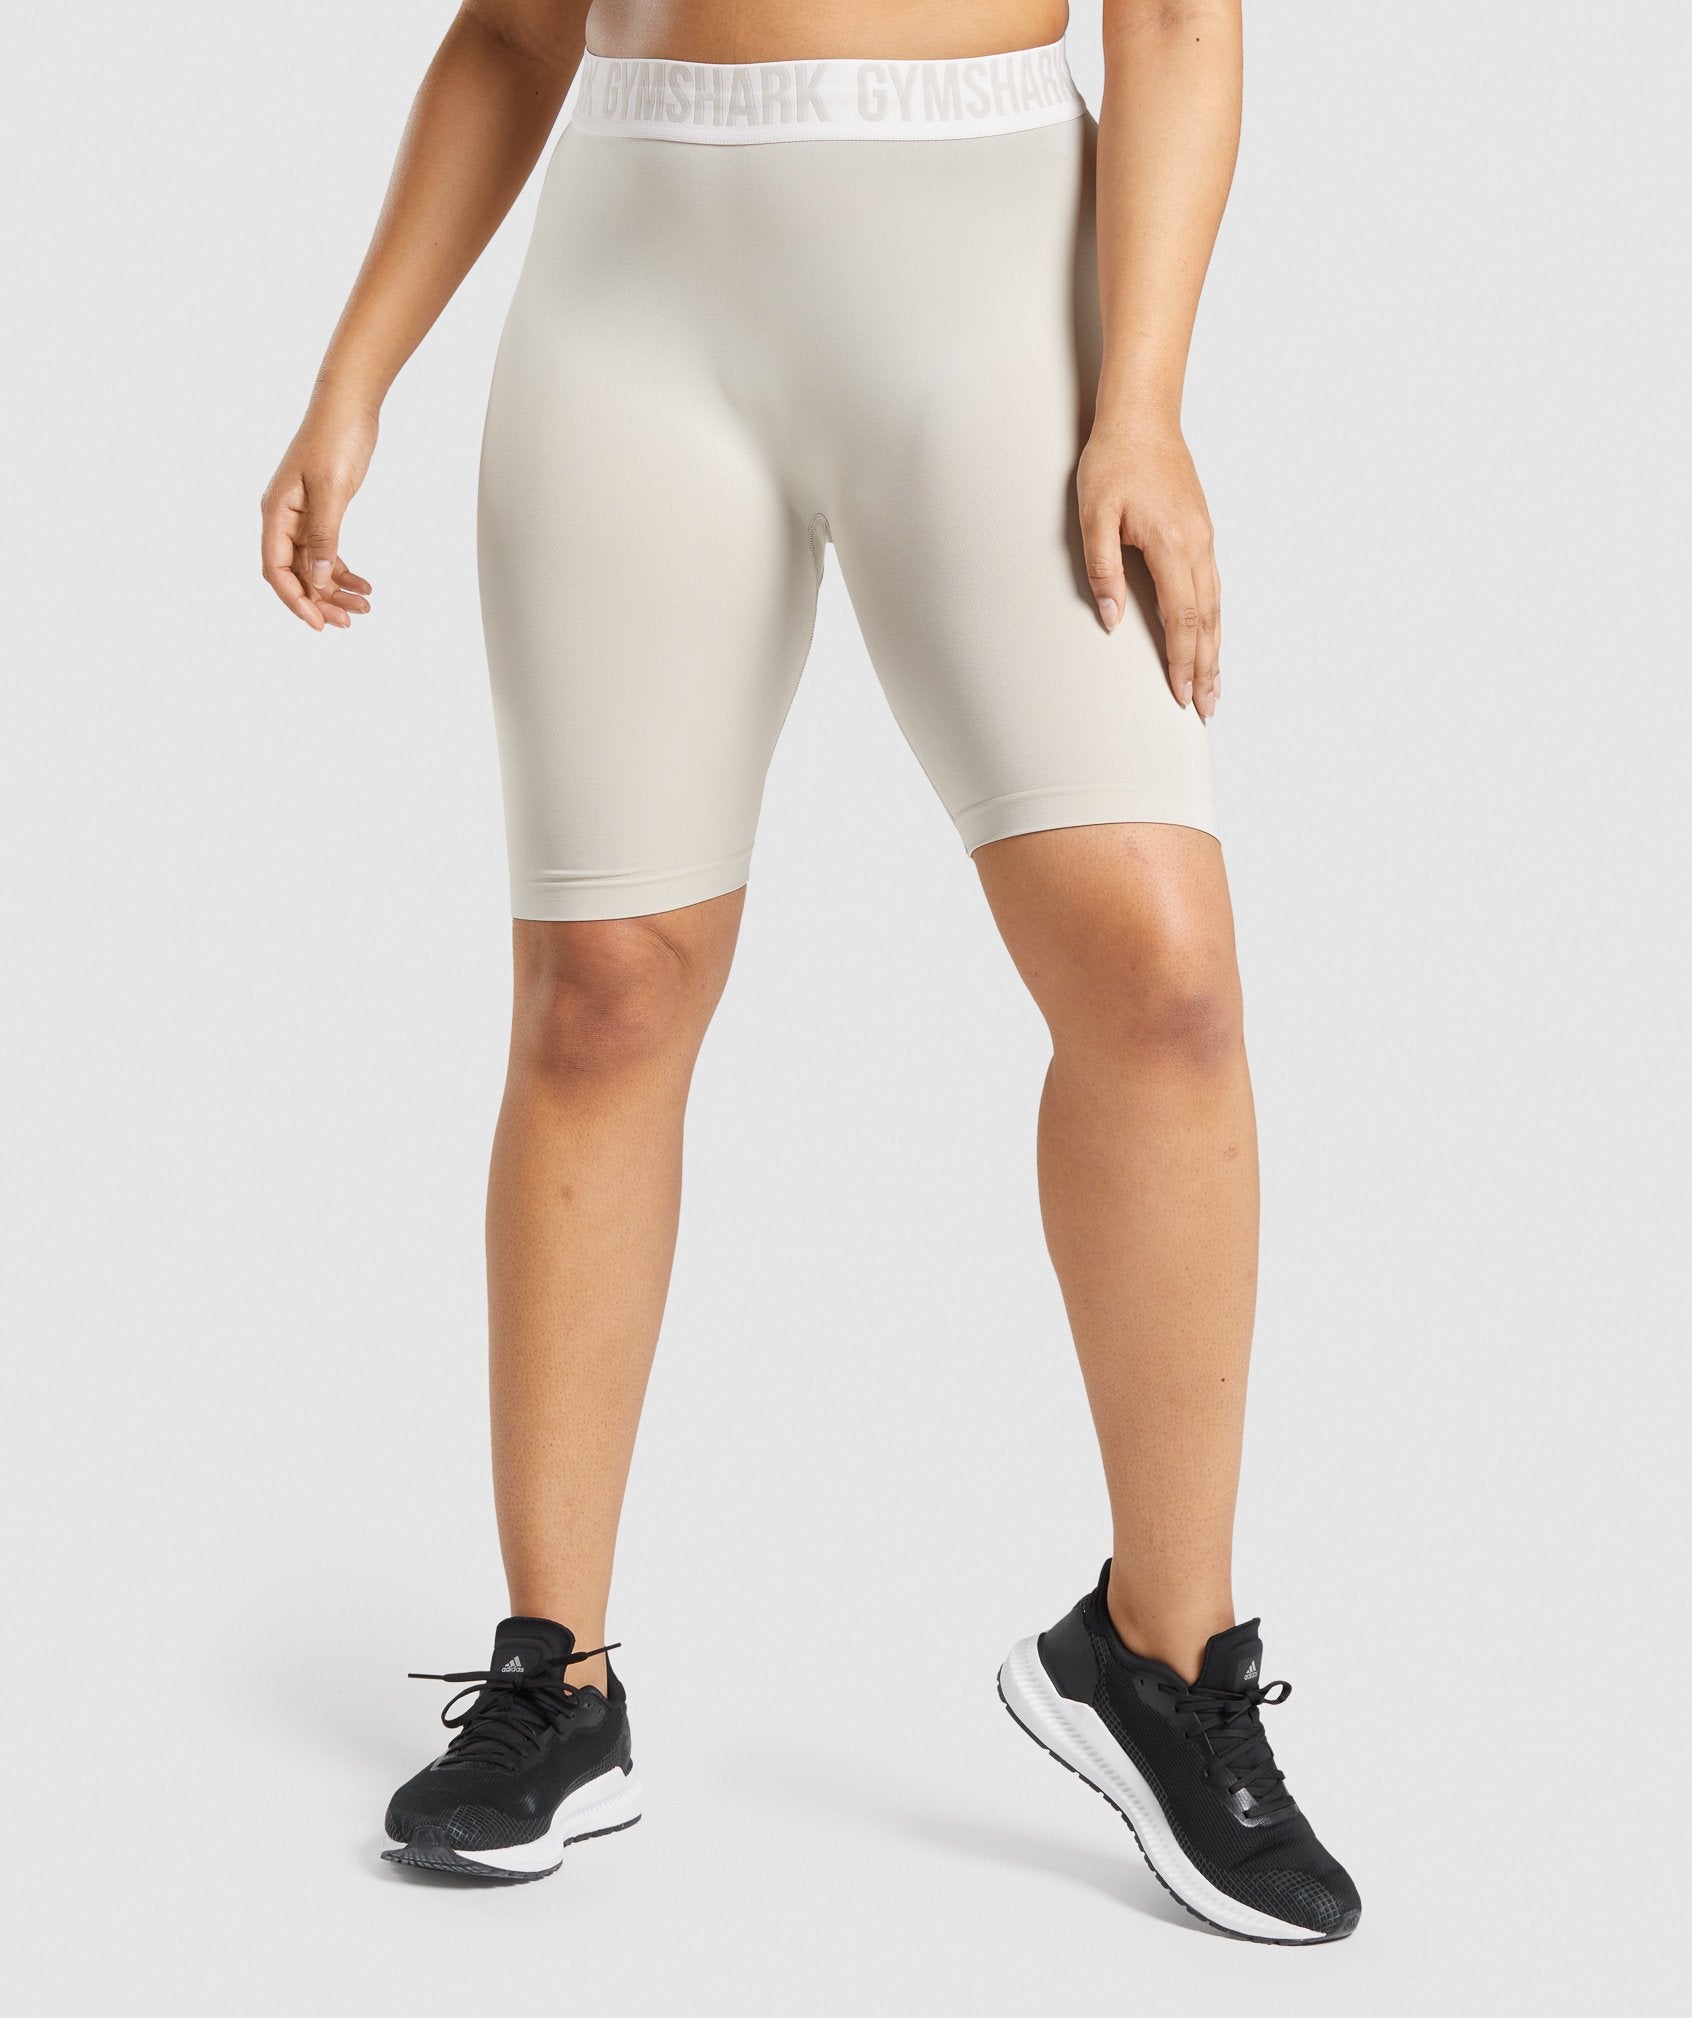 Buy BENCH Women's Seamless Shapewear Cycling Shorts Light Support